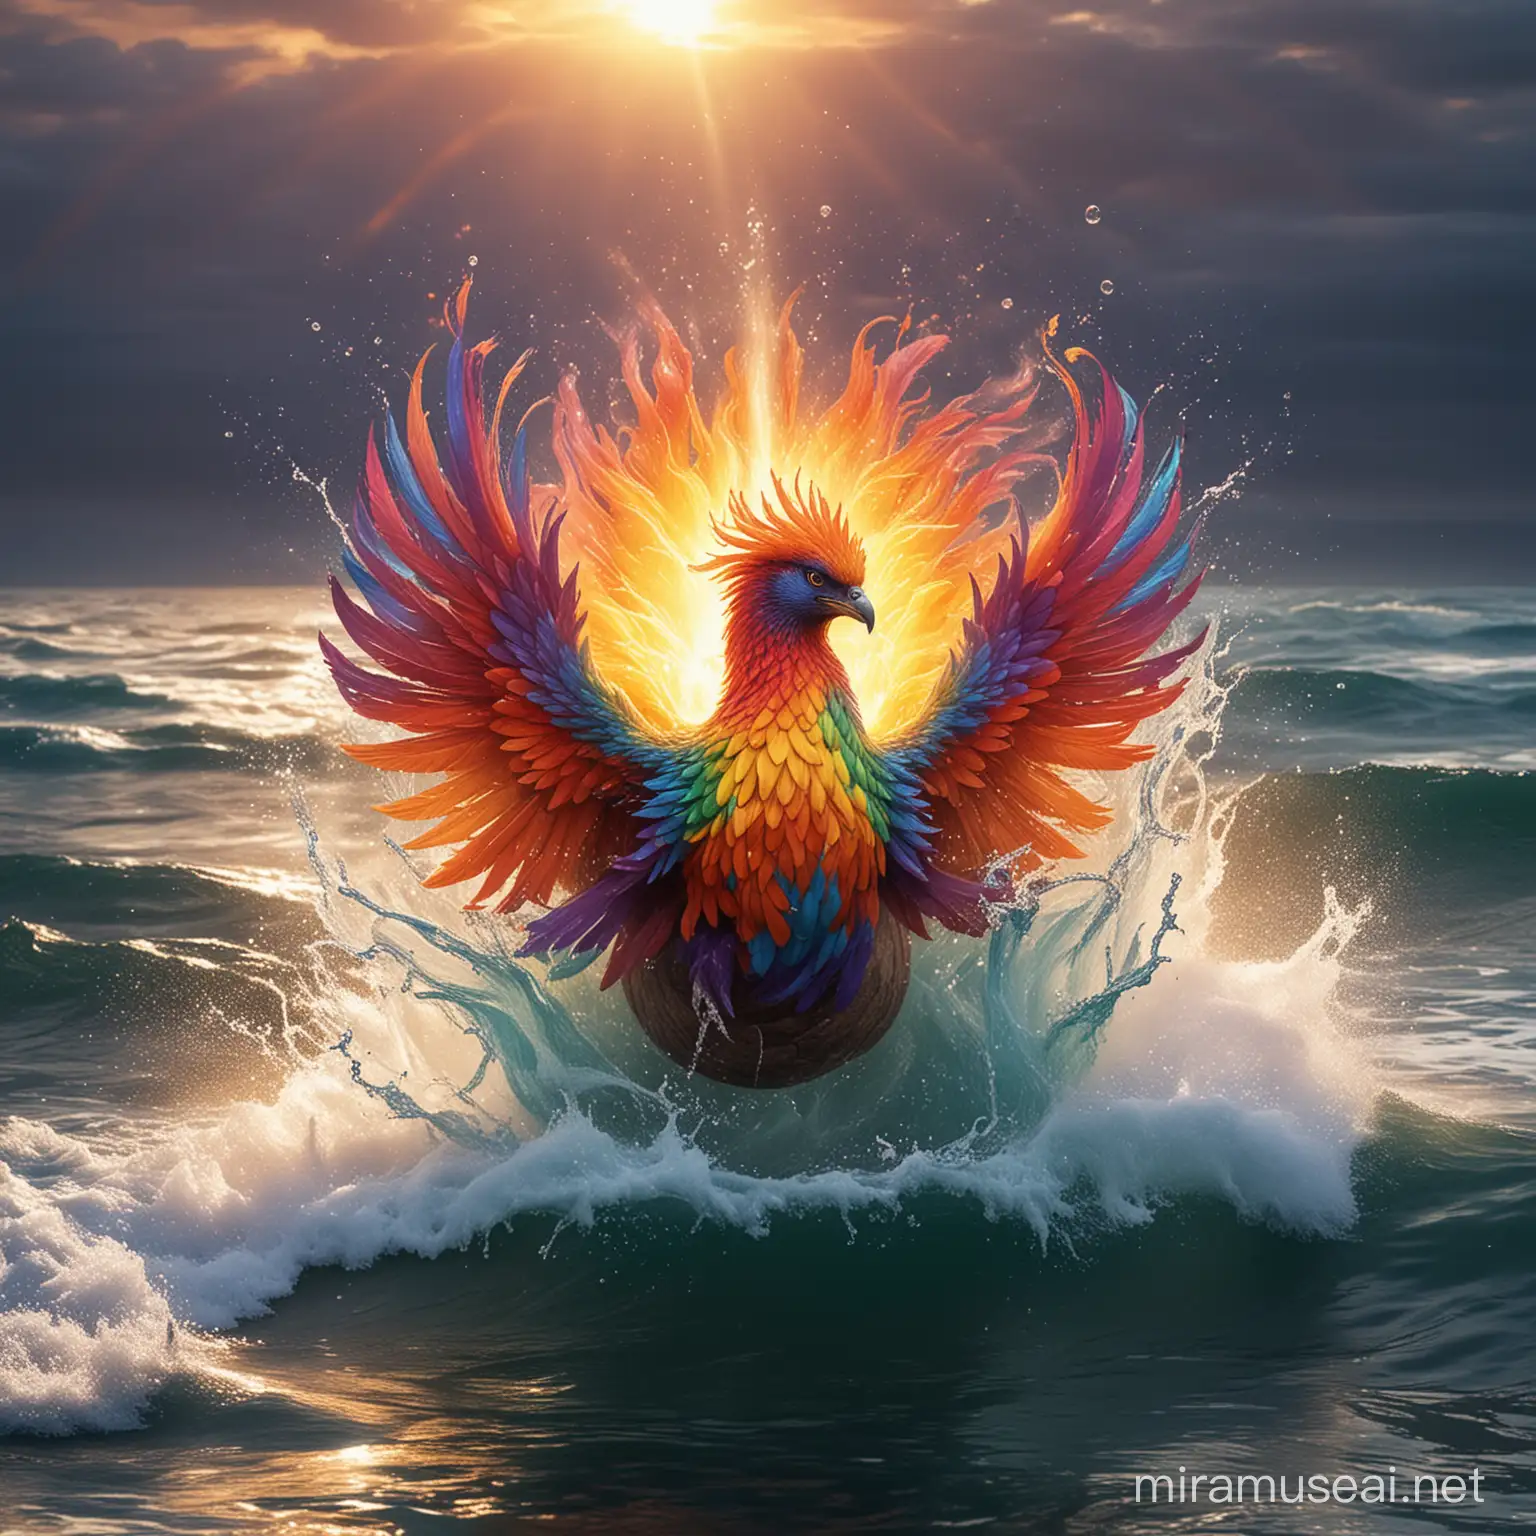 fiery rainbow phoenix emerging from a ball of water in the ocean